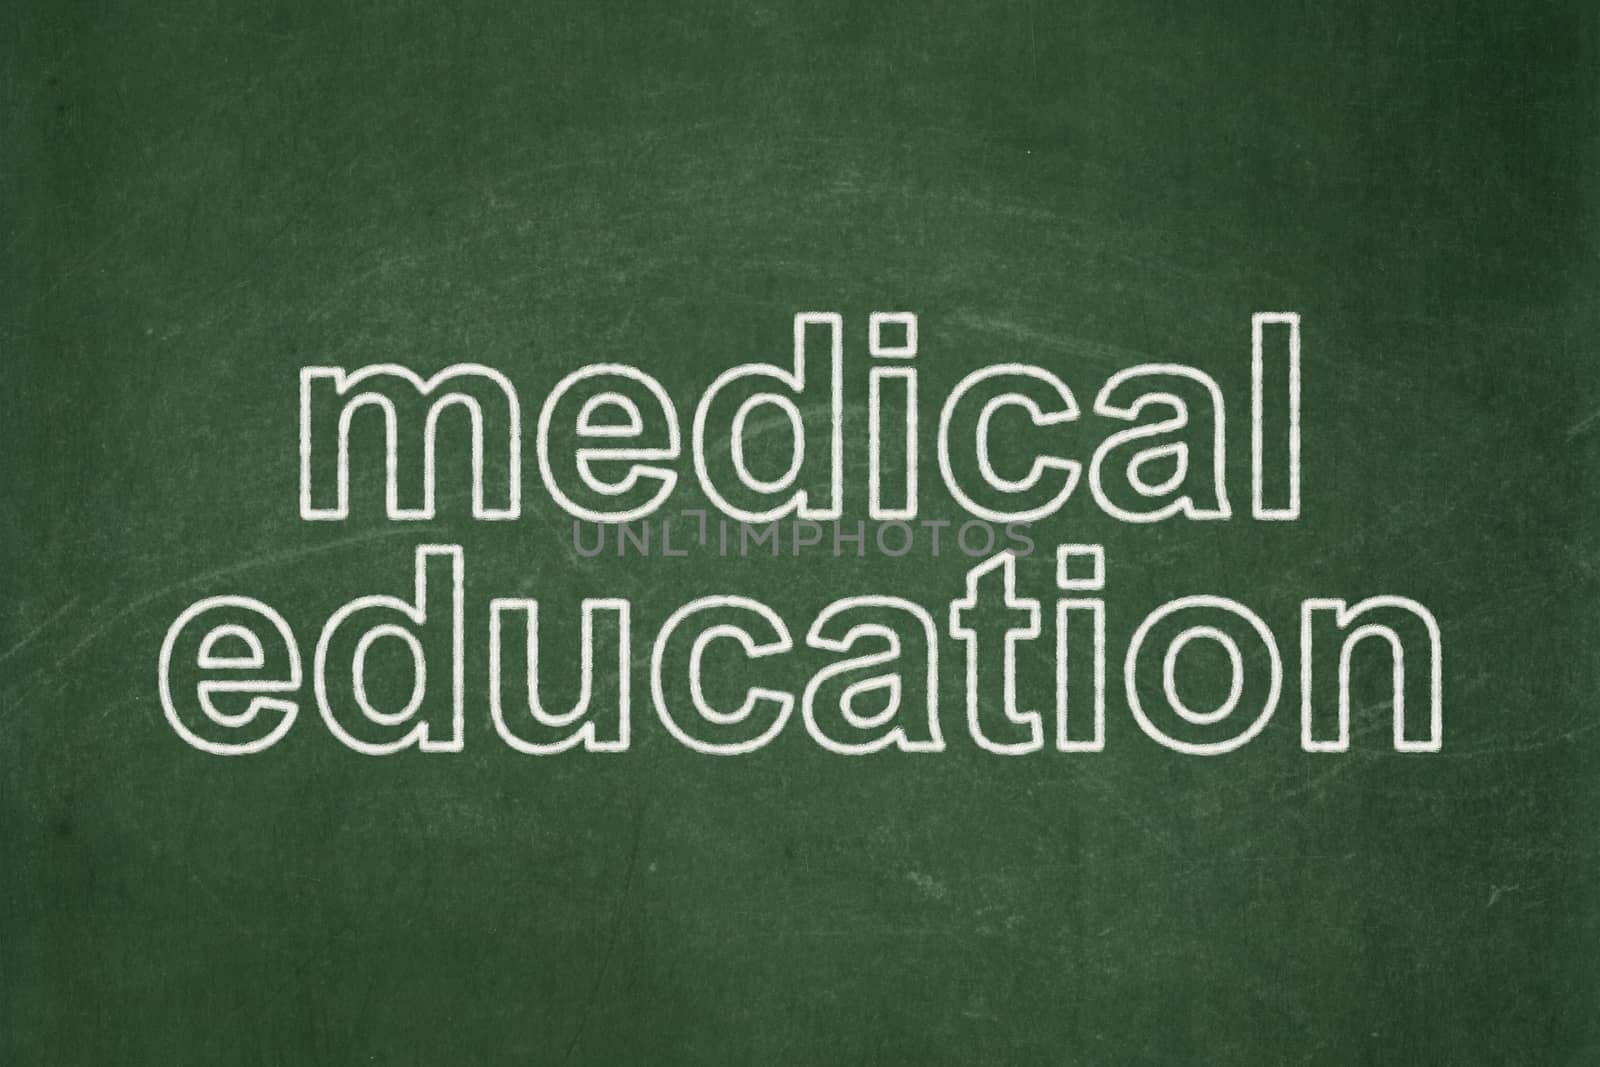 Education concept: Medical Education on chalkboard background by maxkabakov